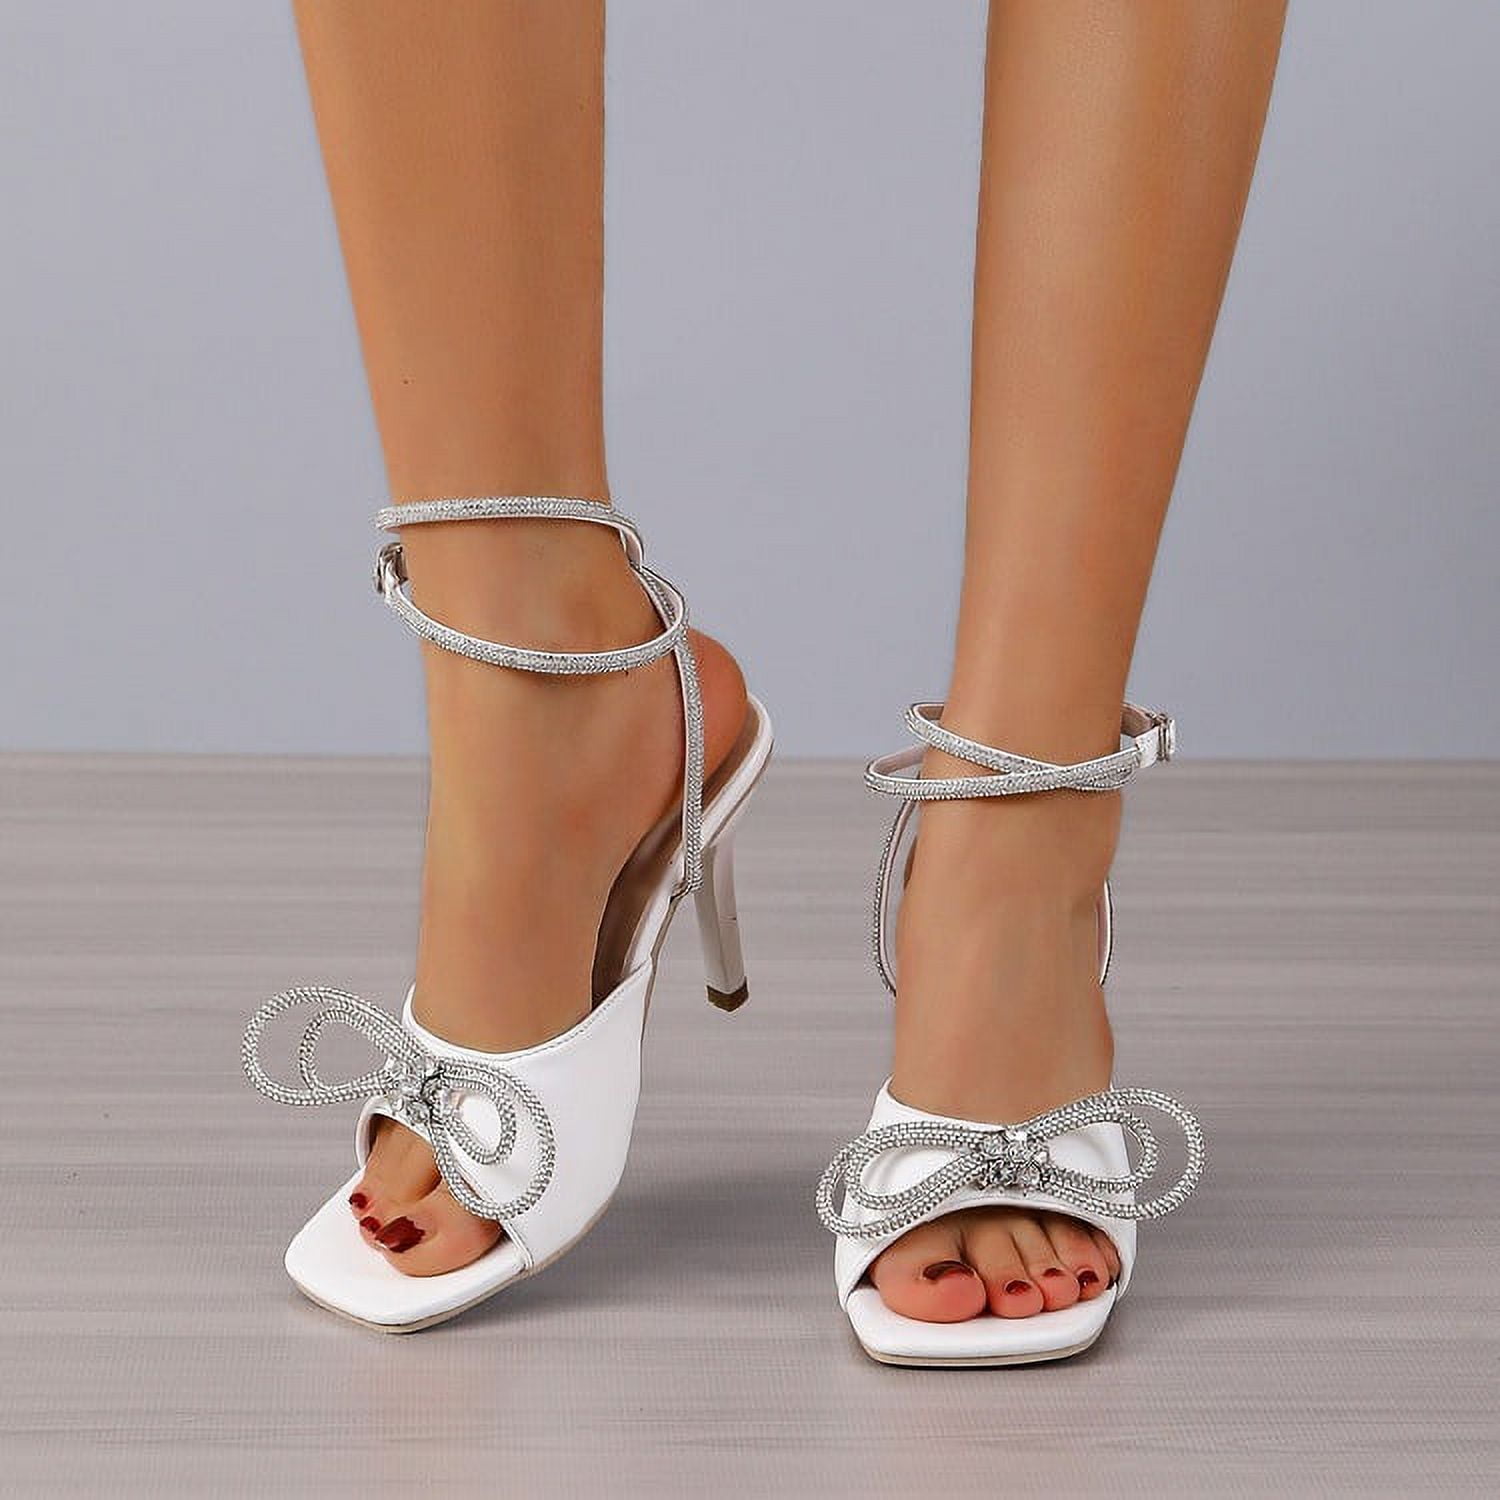 Women's Rhinestone Bowknot High Heels Glitter Pointed Toe Slip On Stiletto  Heels Party Wedding Dress Pumps